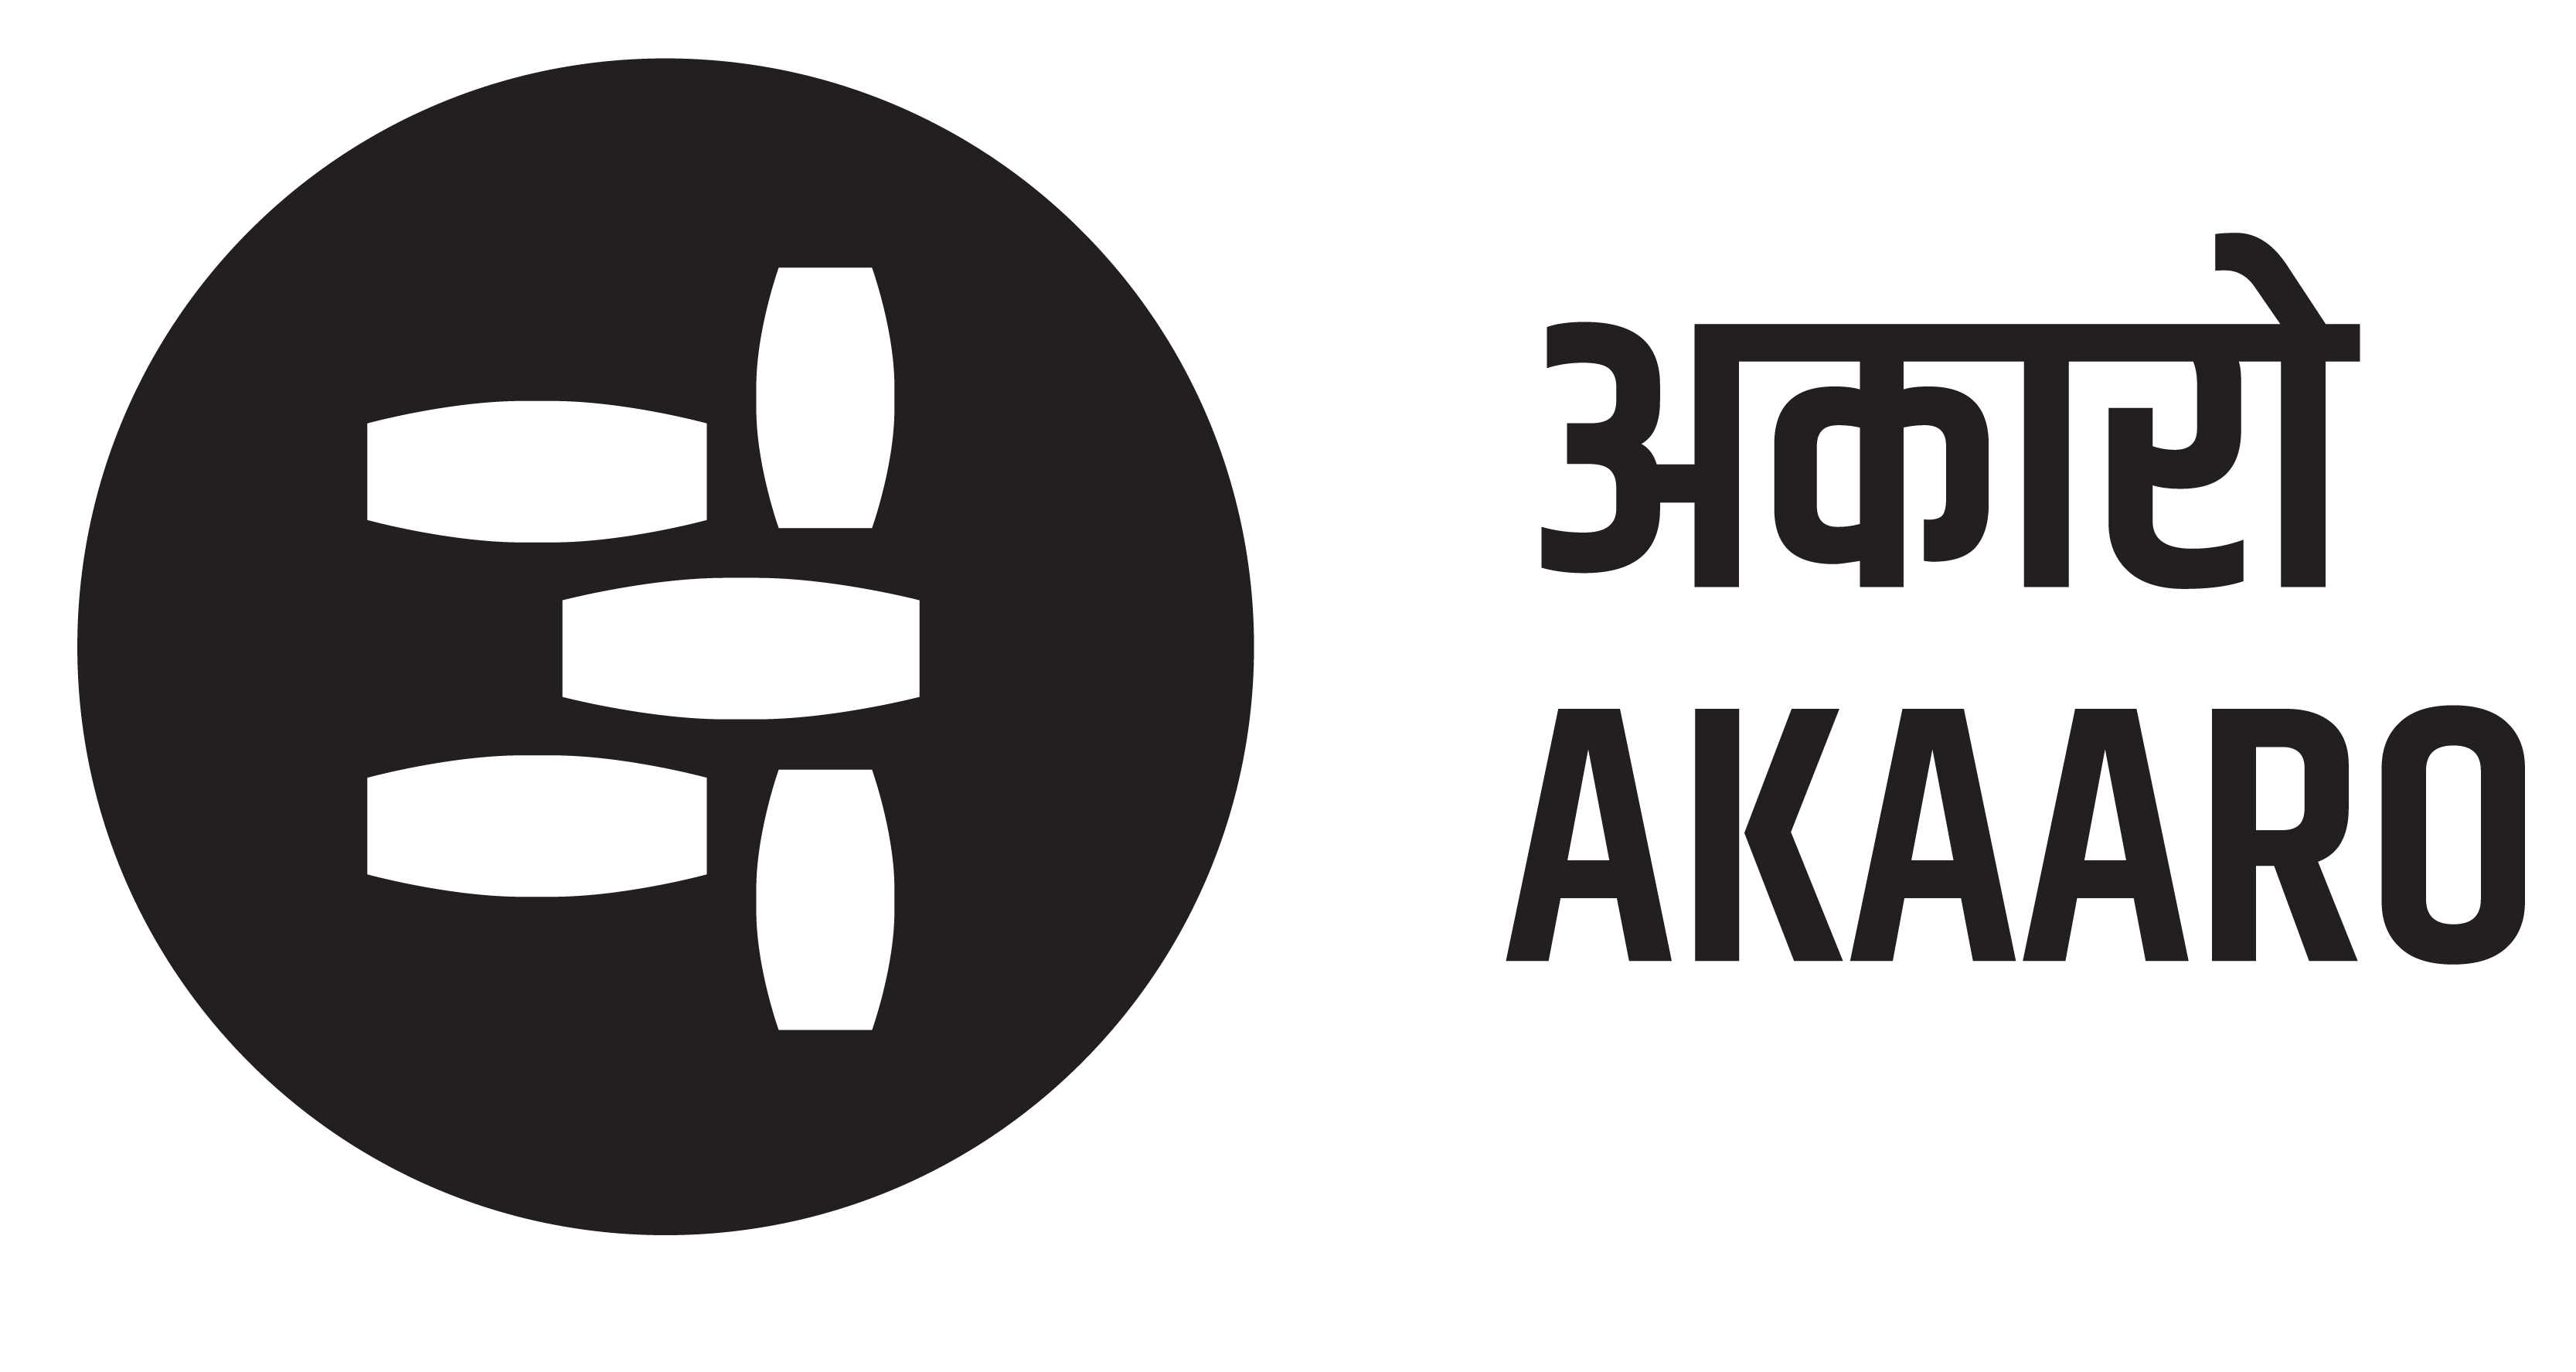 Akaaro